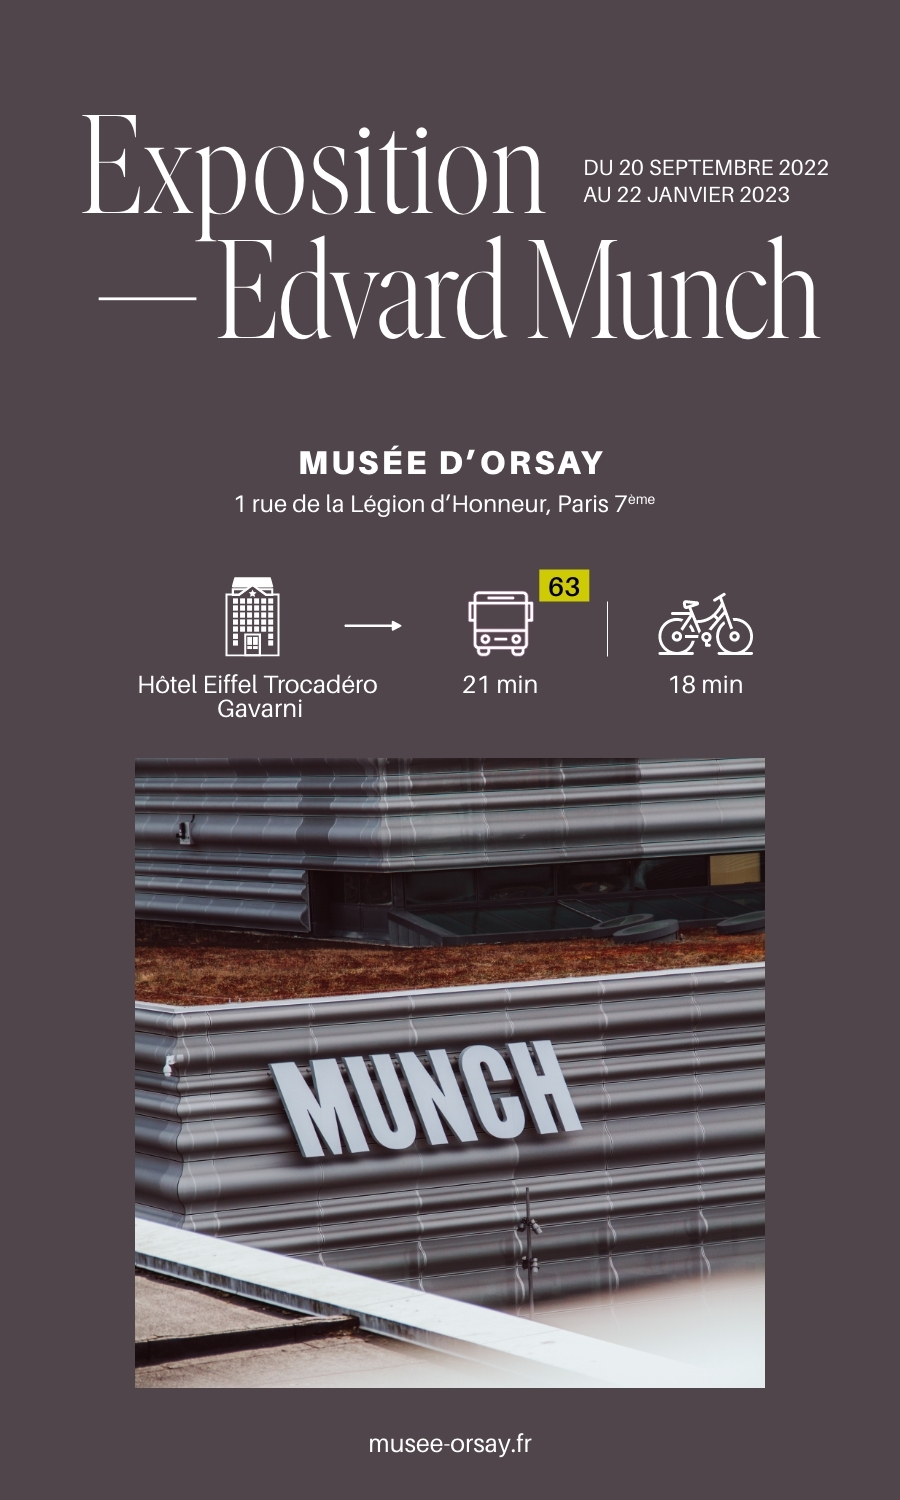 Edvard Munch. Exhibition